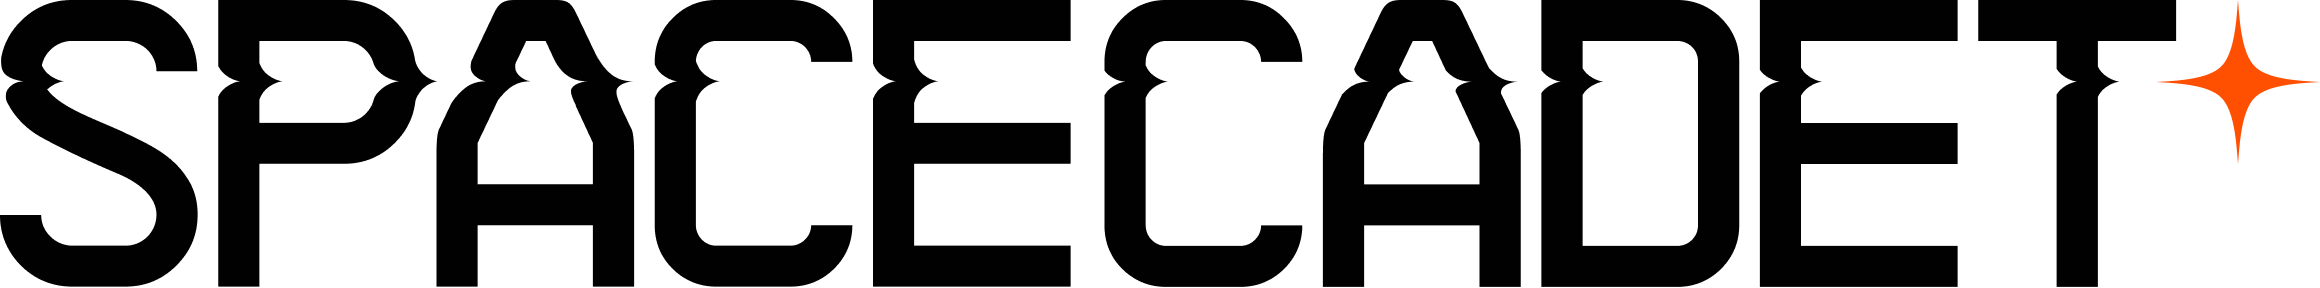 Spacecadet logo